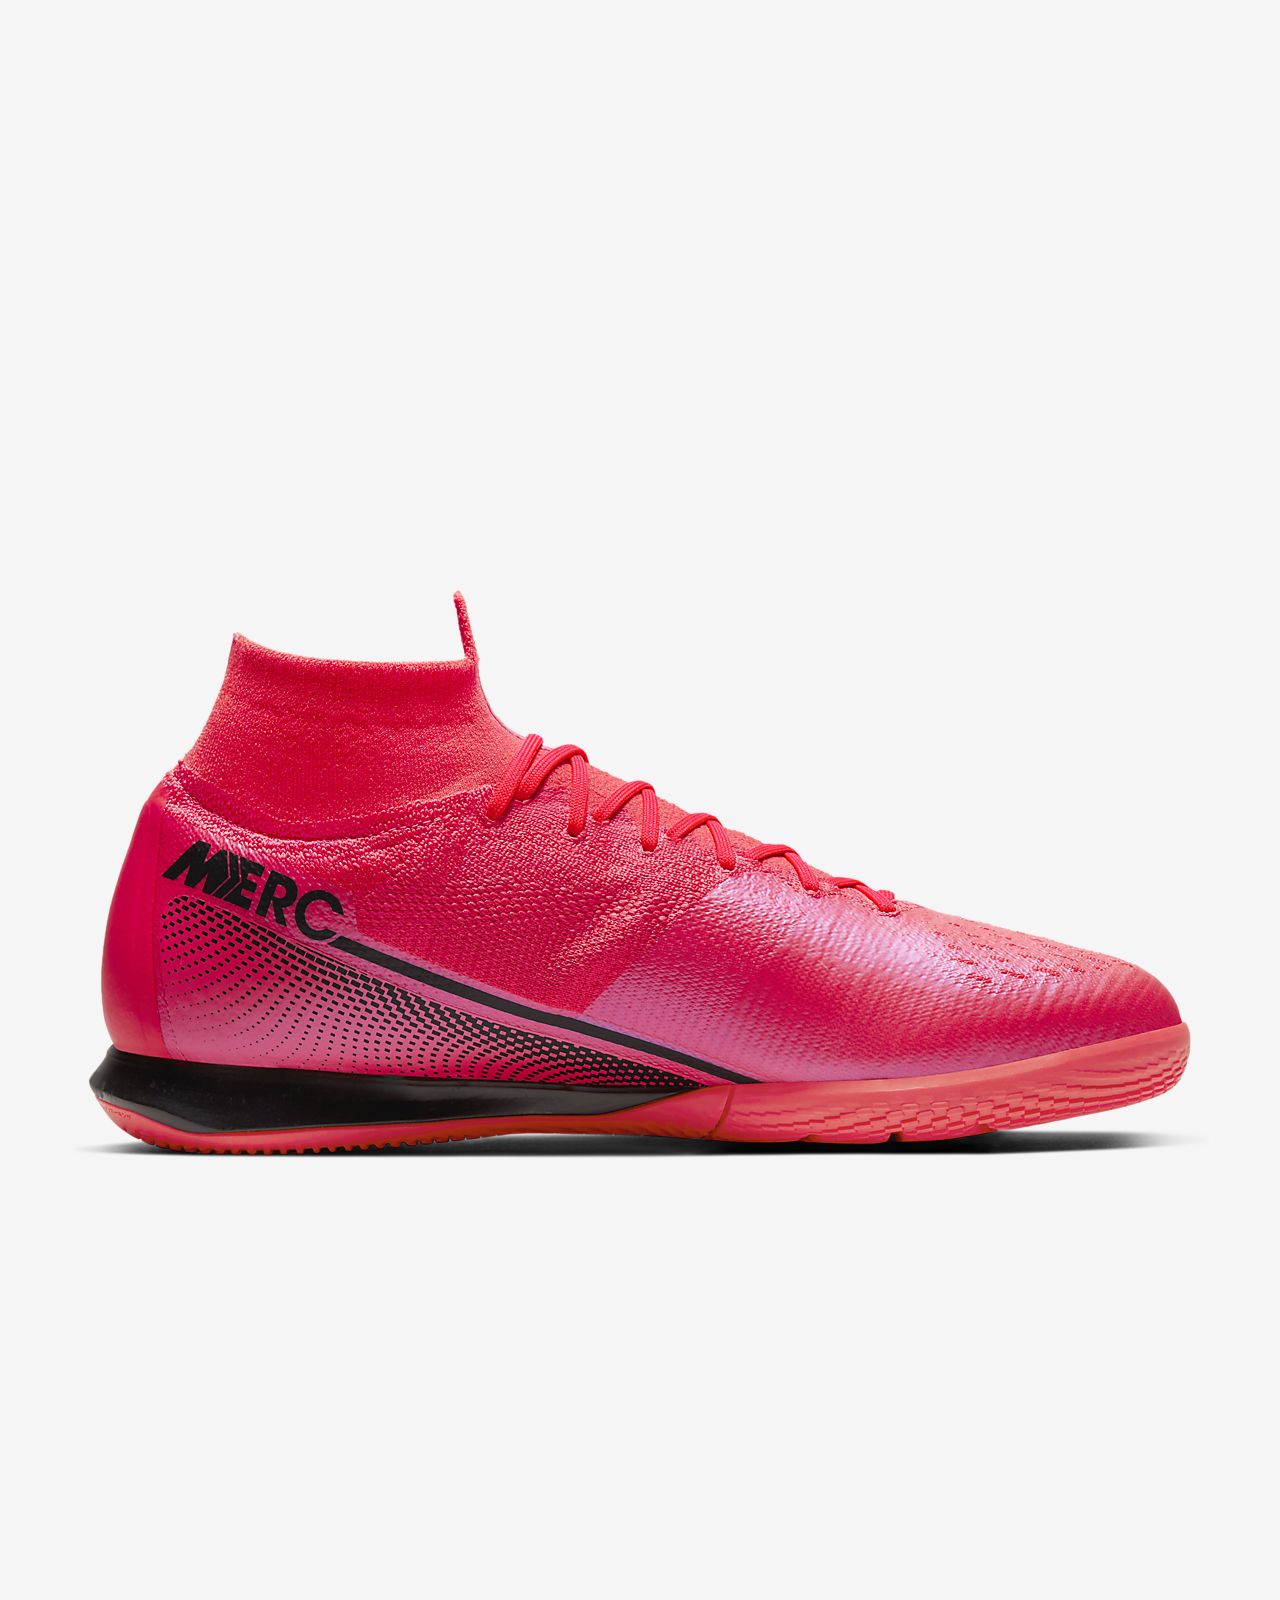 Nike Mercurial Superfly 7 Elite TF Artificial Turf Soccer Shoe.